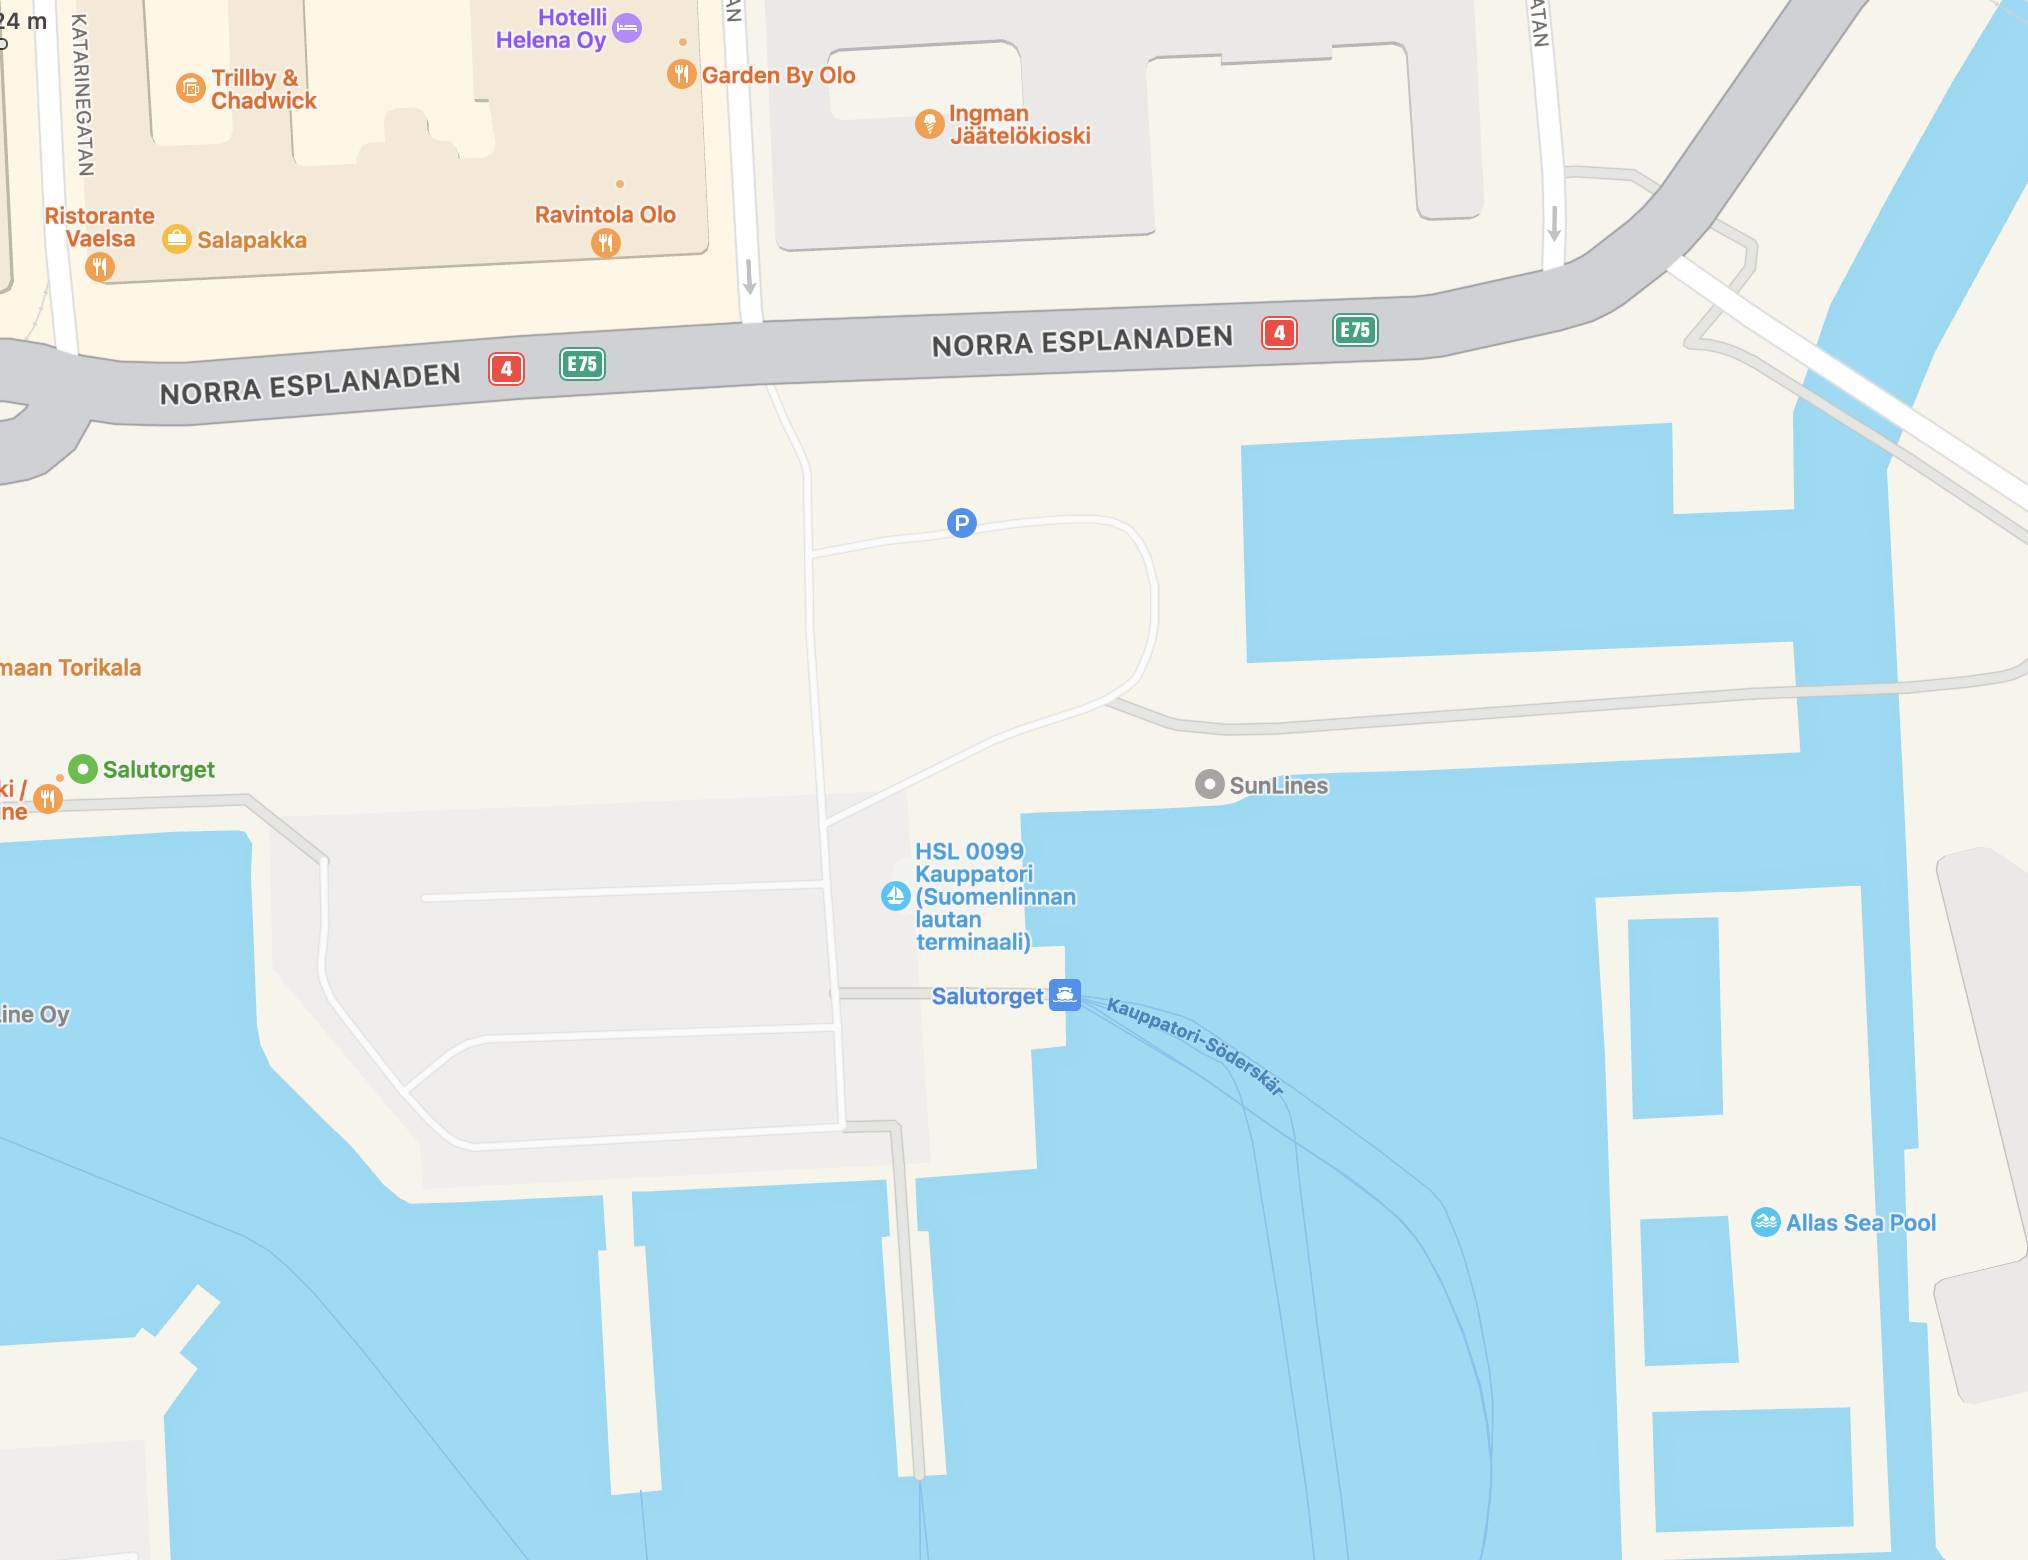 Kauppatori (Market Place) Suomenlinna / Sveaborg / Fortress of Finland ferry terminal 